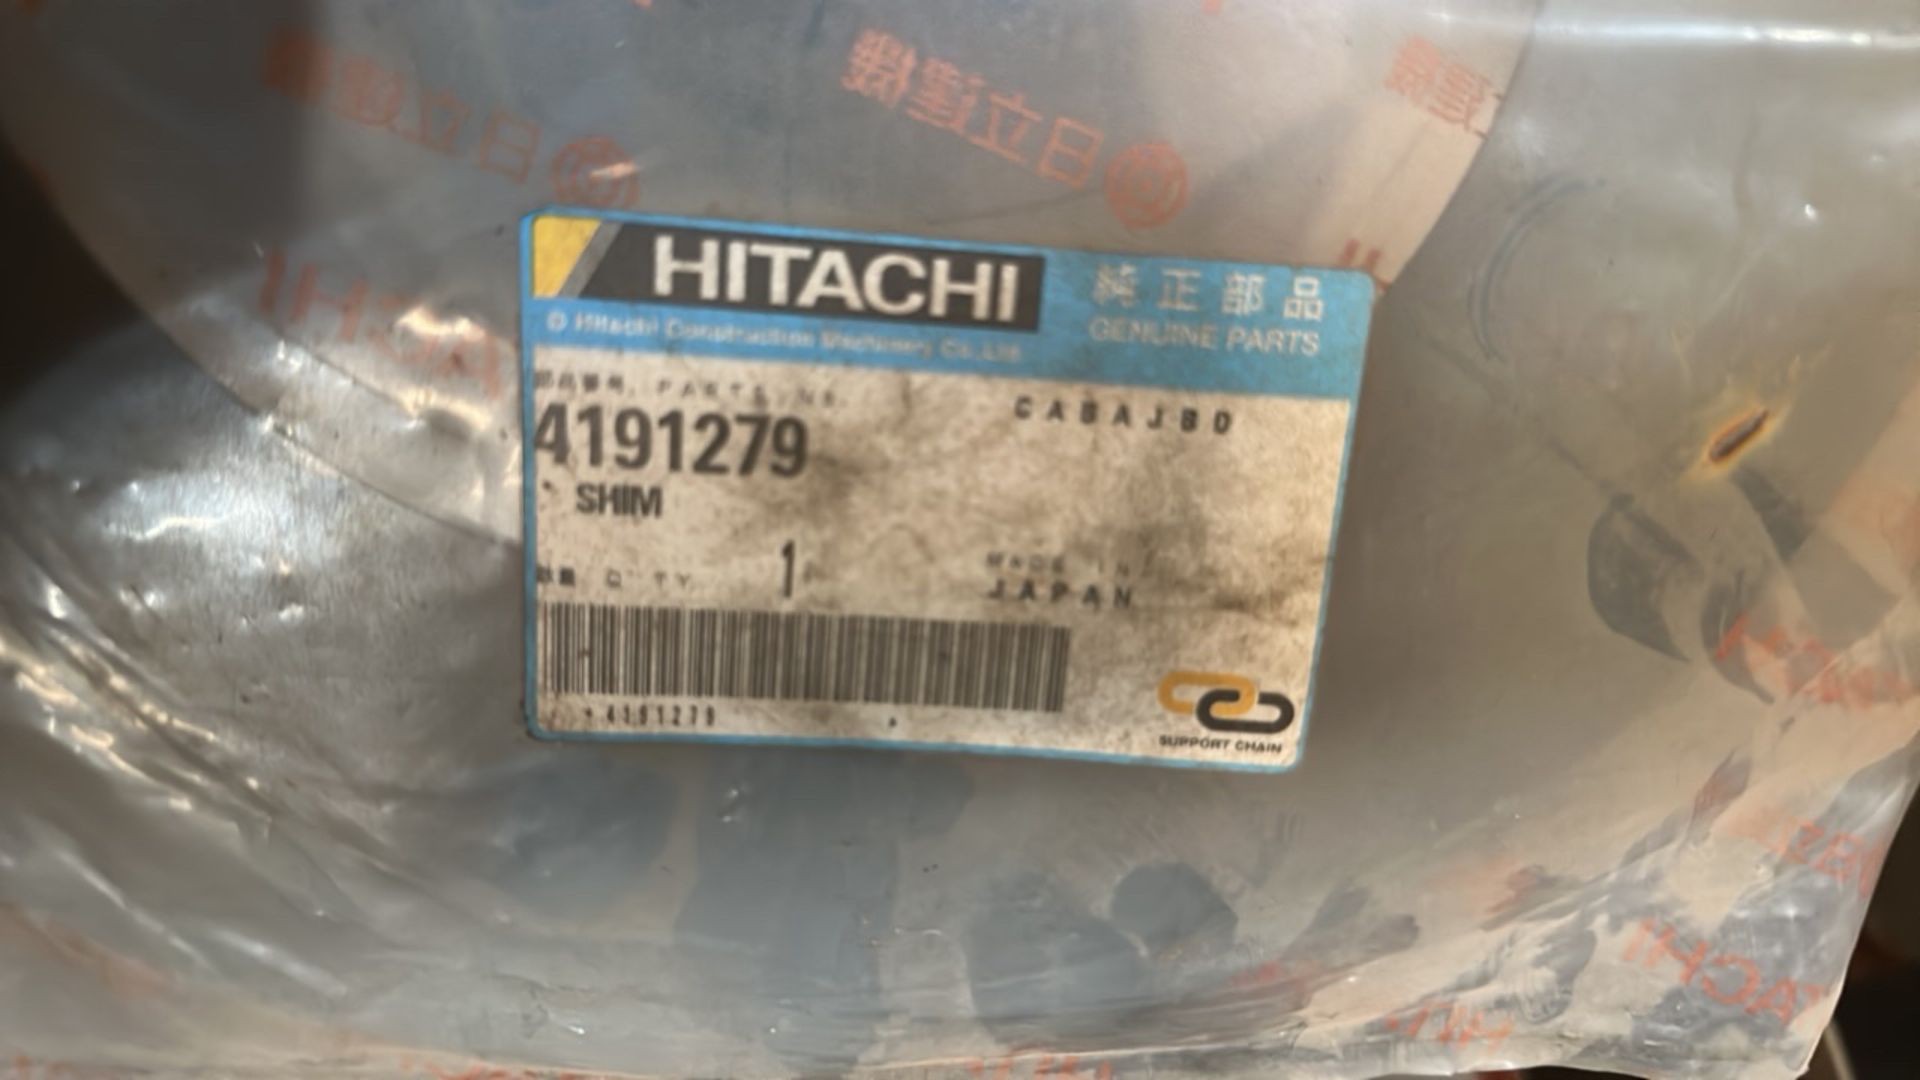 Hitachi Model ZX670 Parts - Image 15 of 28